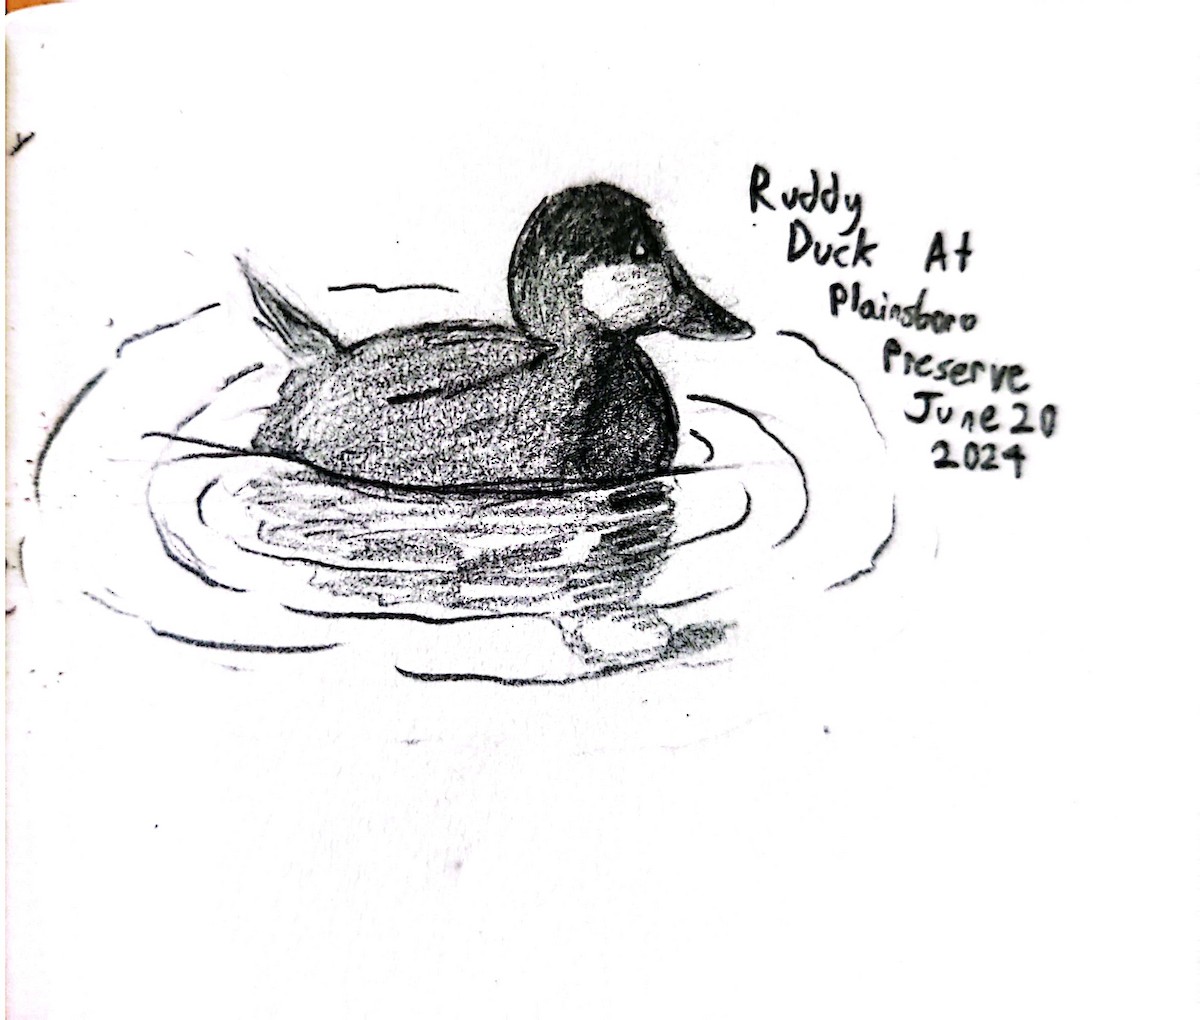 Ruddy Duck - Anagha R